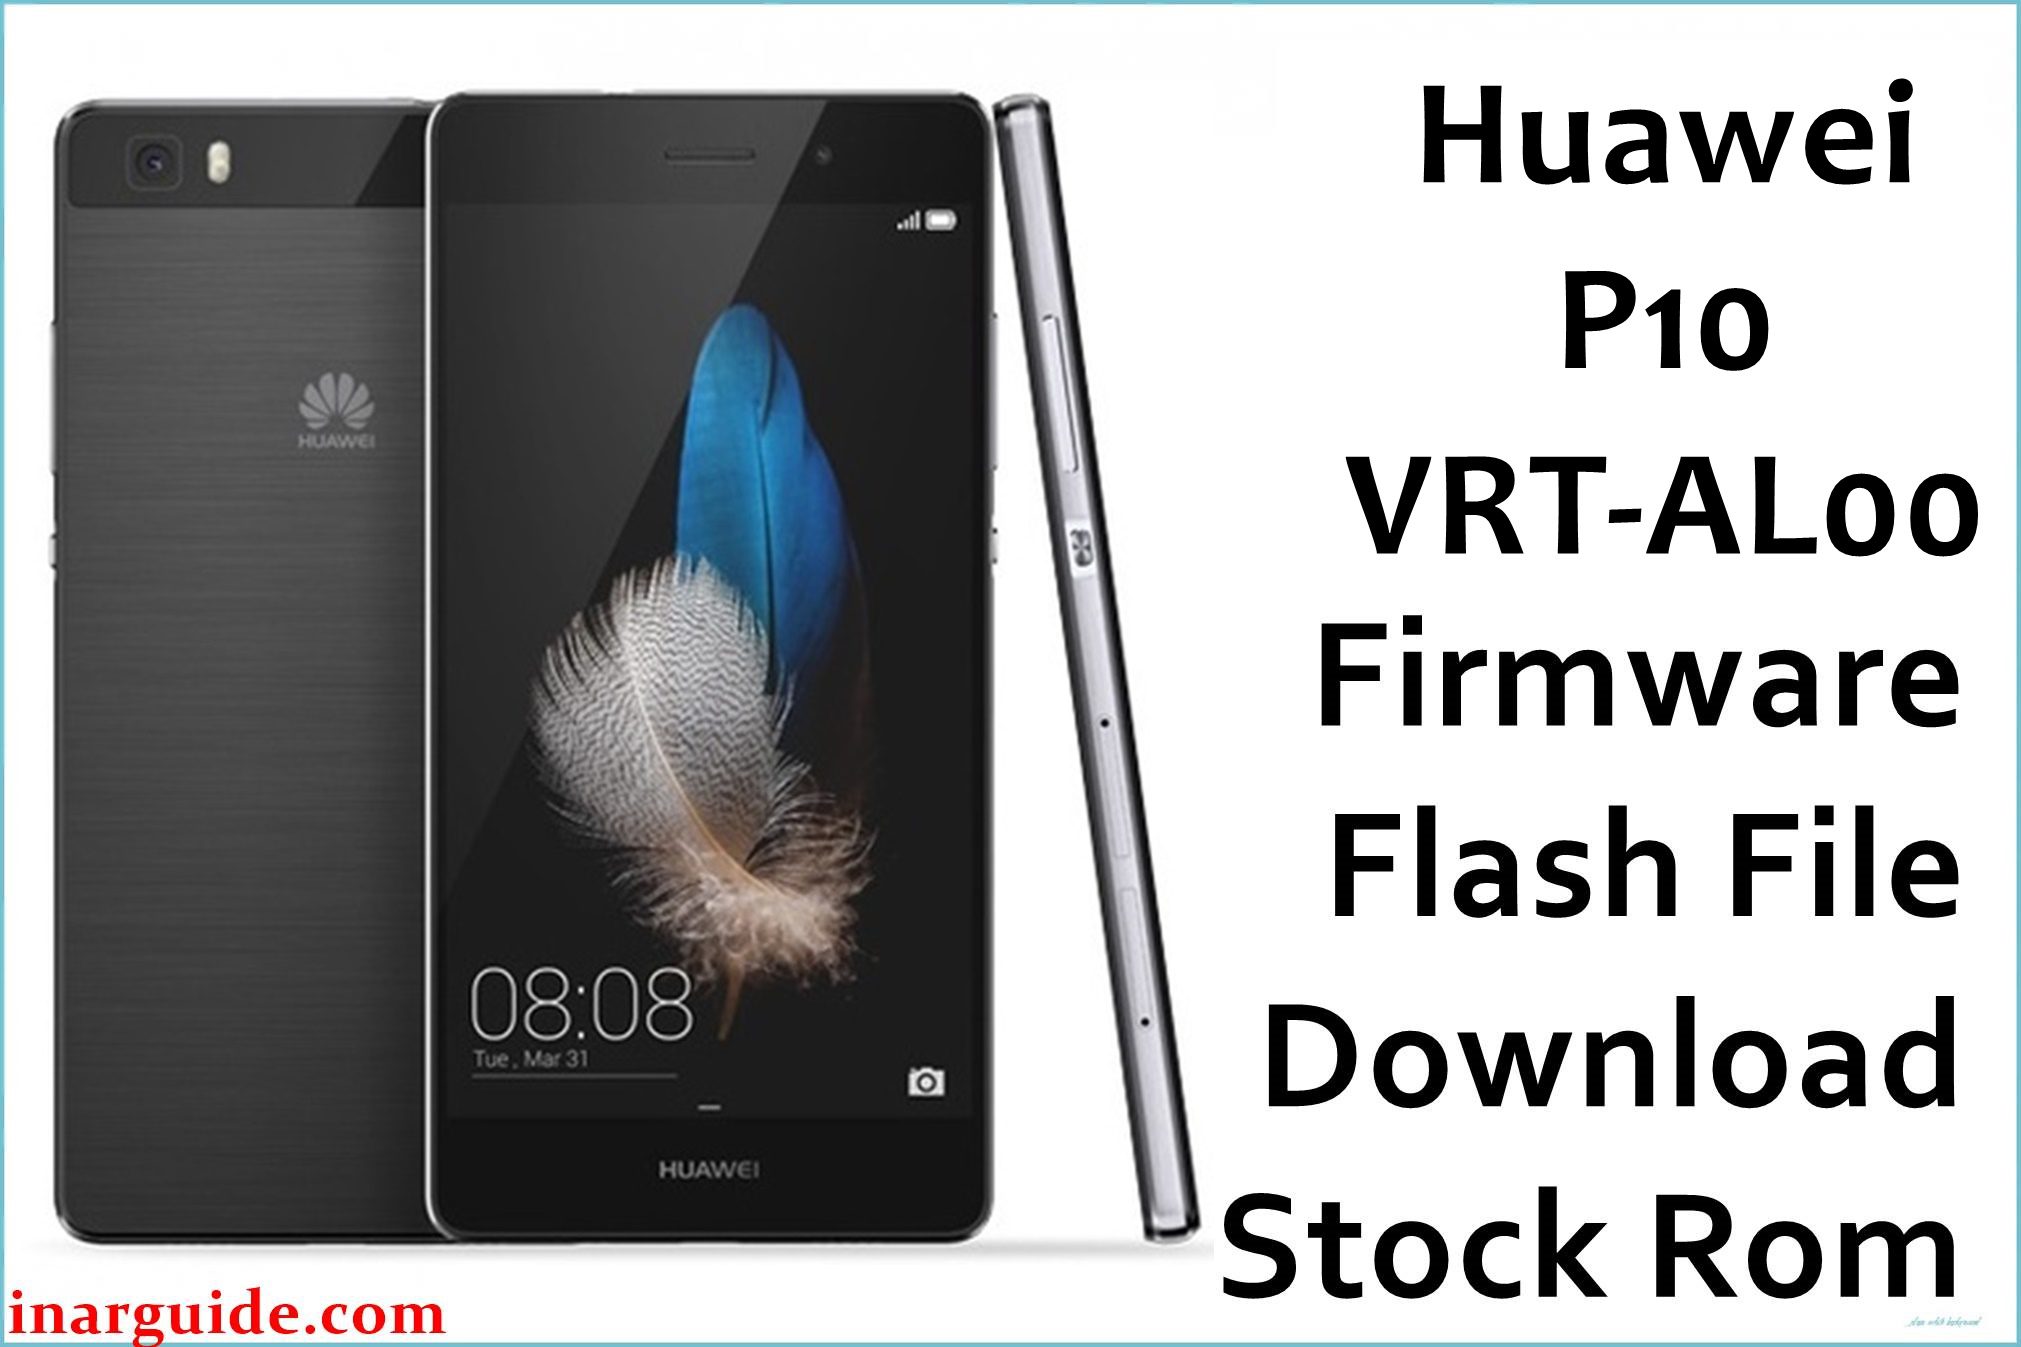 Huawei P10 VRT AL00